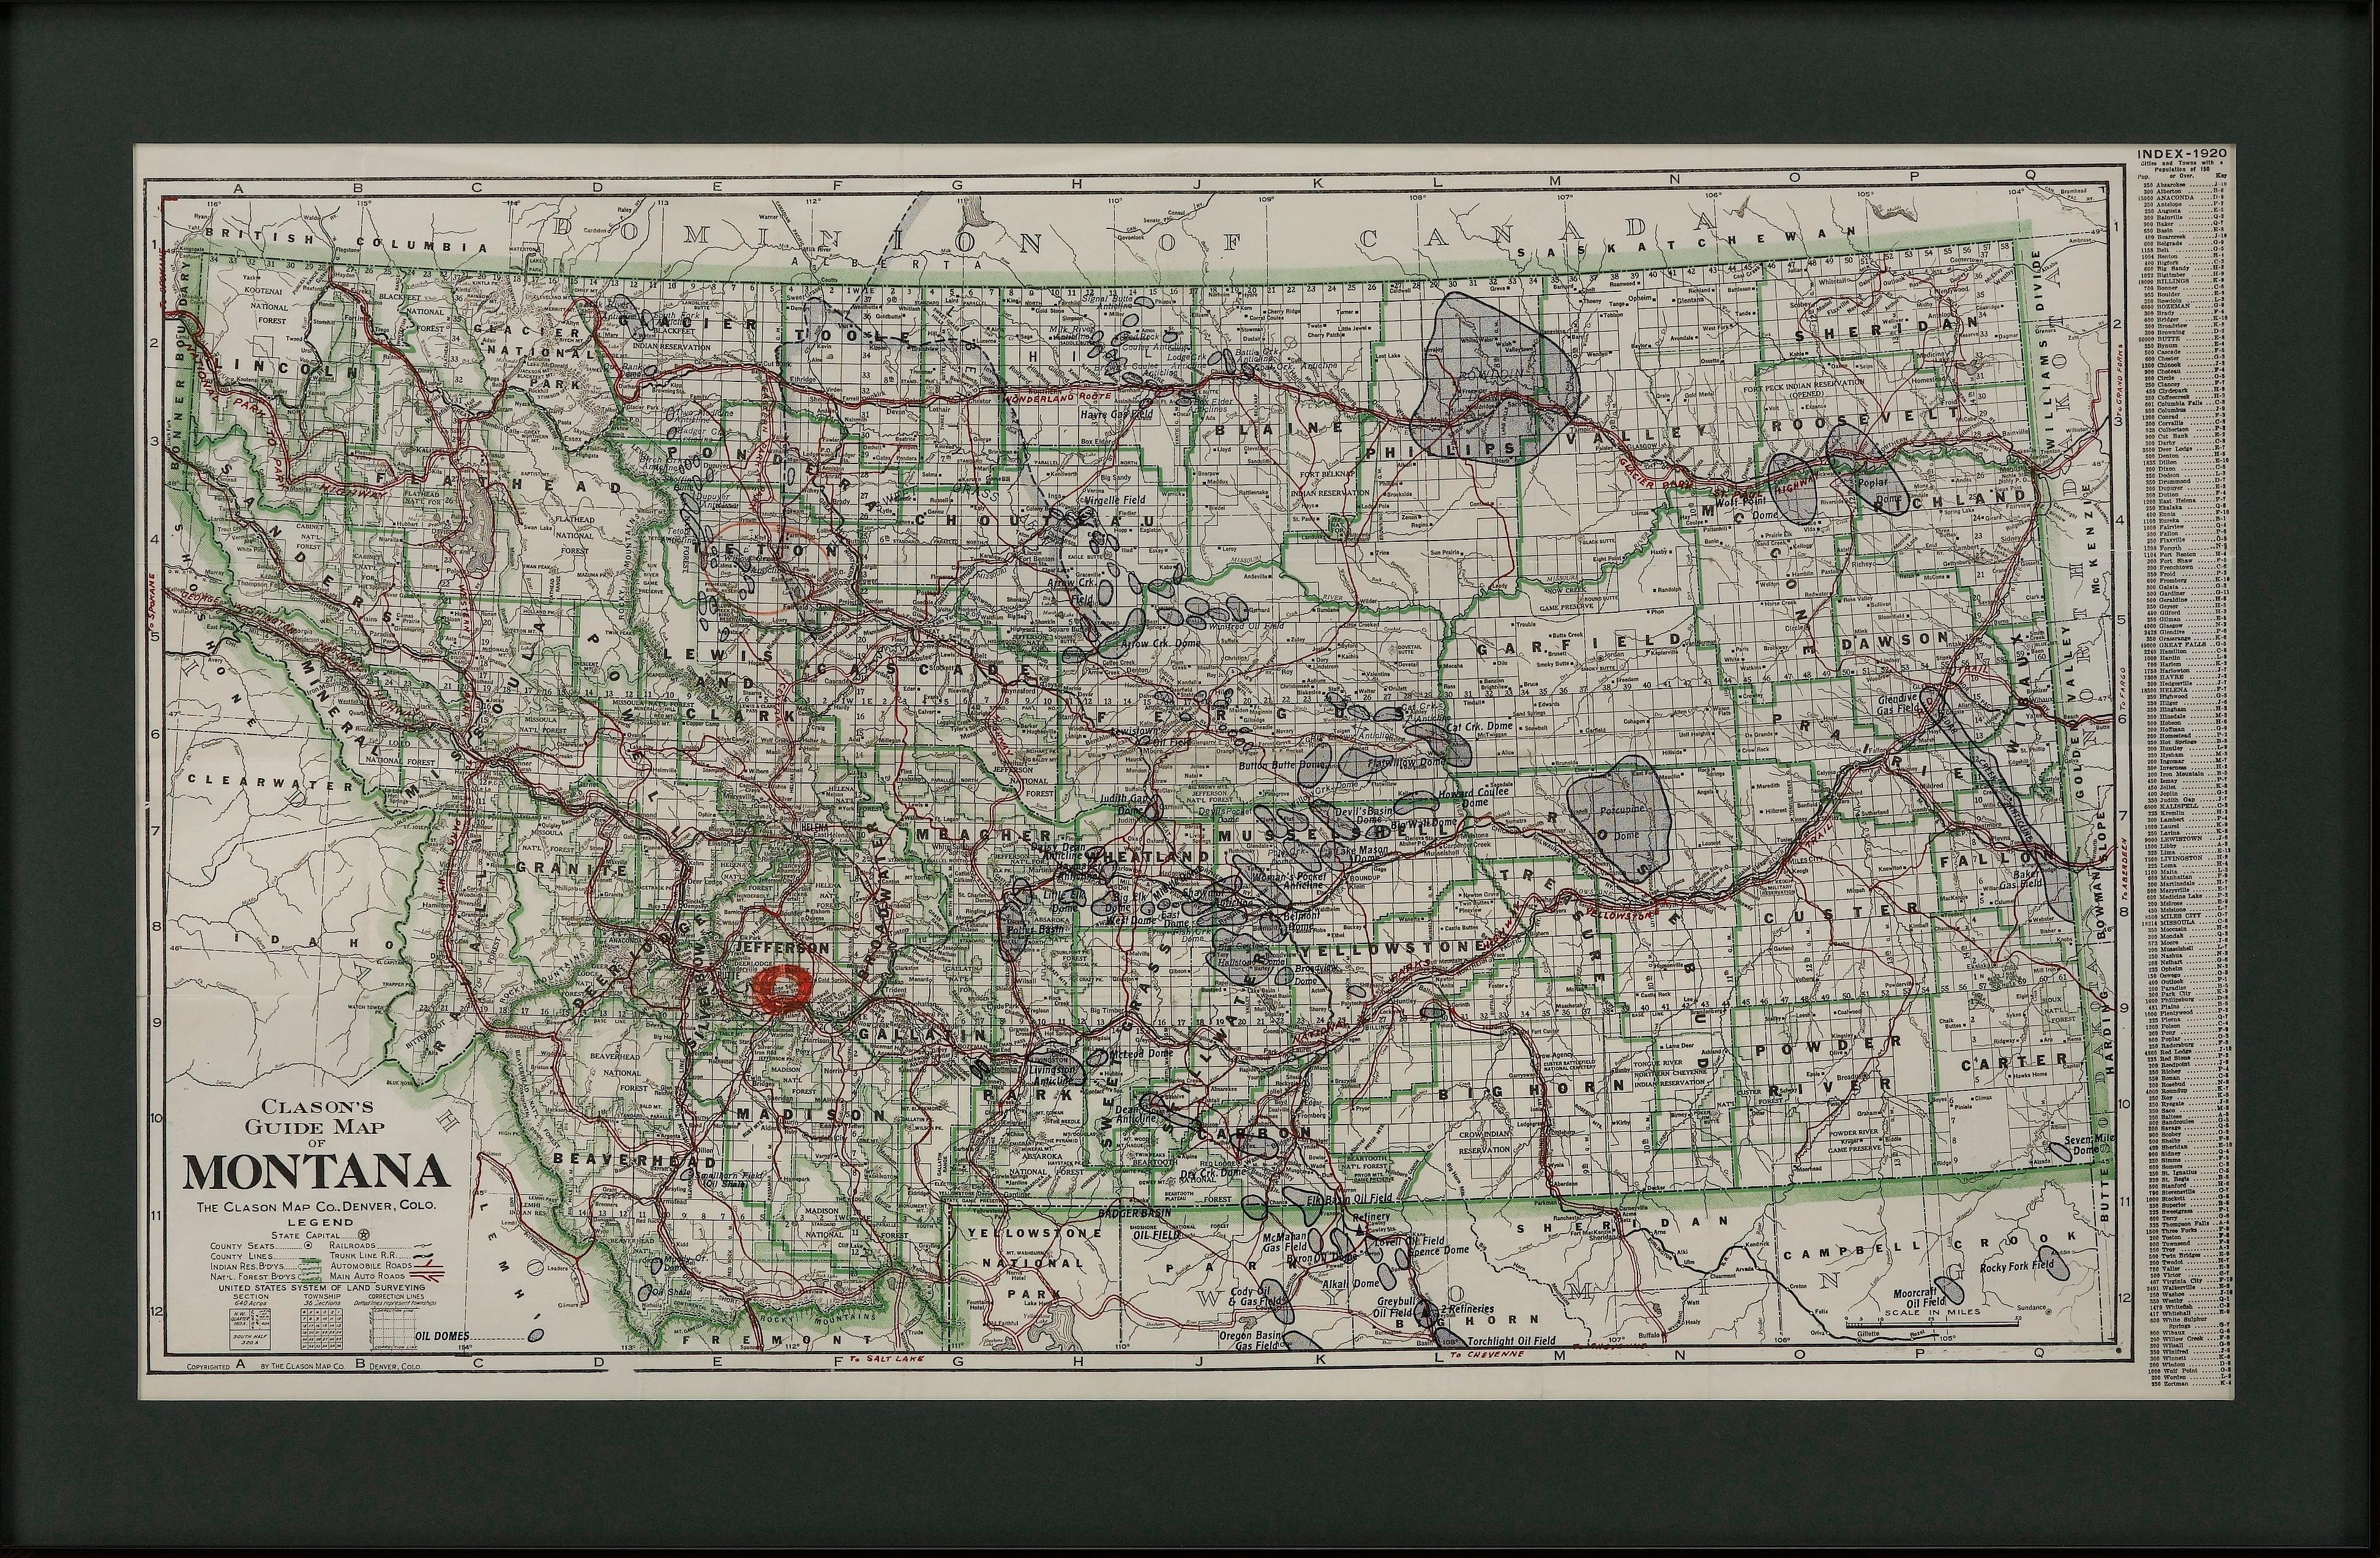 „Clason's Guide Map of Montana“ von The Clason Map Company, ca. 1920er Jahre (amerikanisch) im Angebot